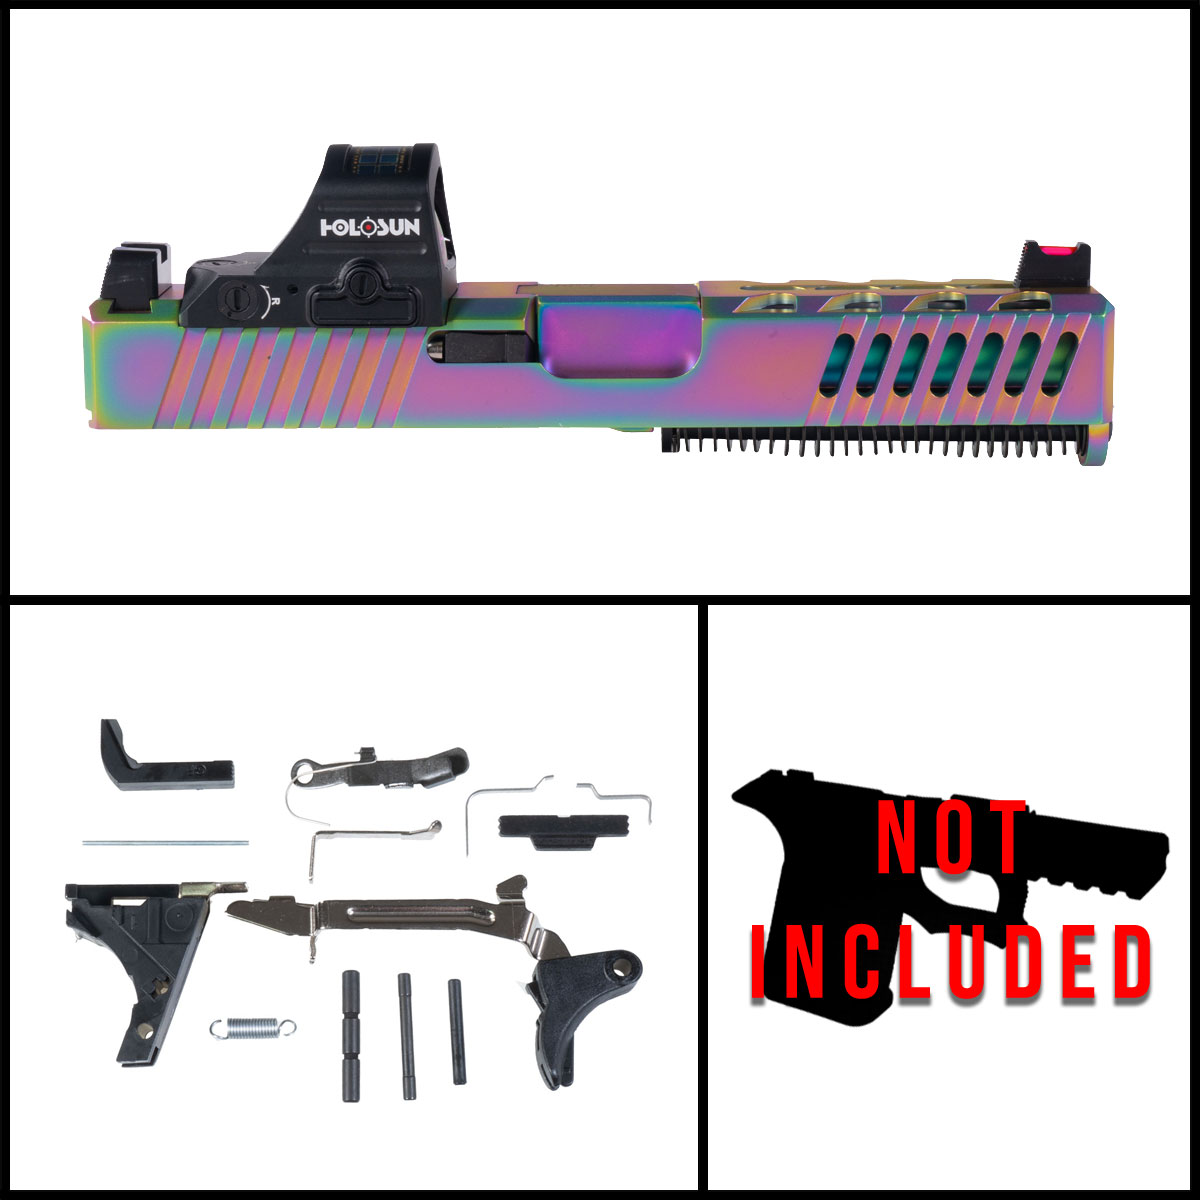 DTT 'ArcLight w/ HS507C-X2' 9mm Full Pistol Build Kits (Everything Minus Frame) - Glock 19 Gen 1-2 Compatible